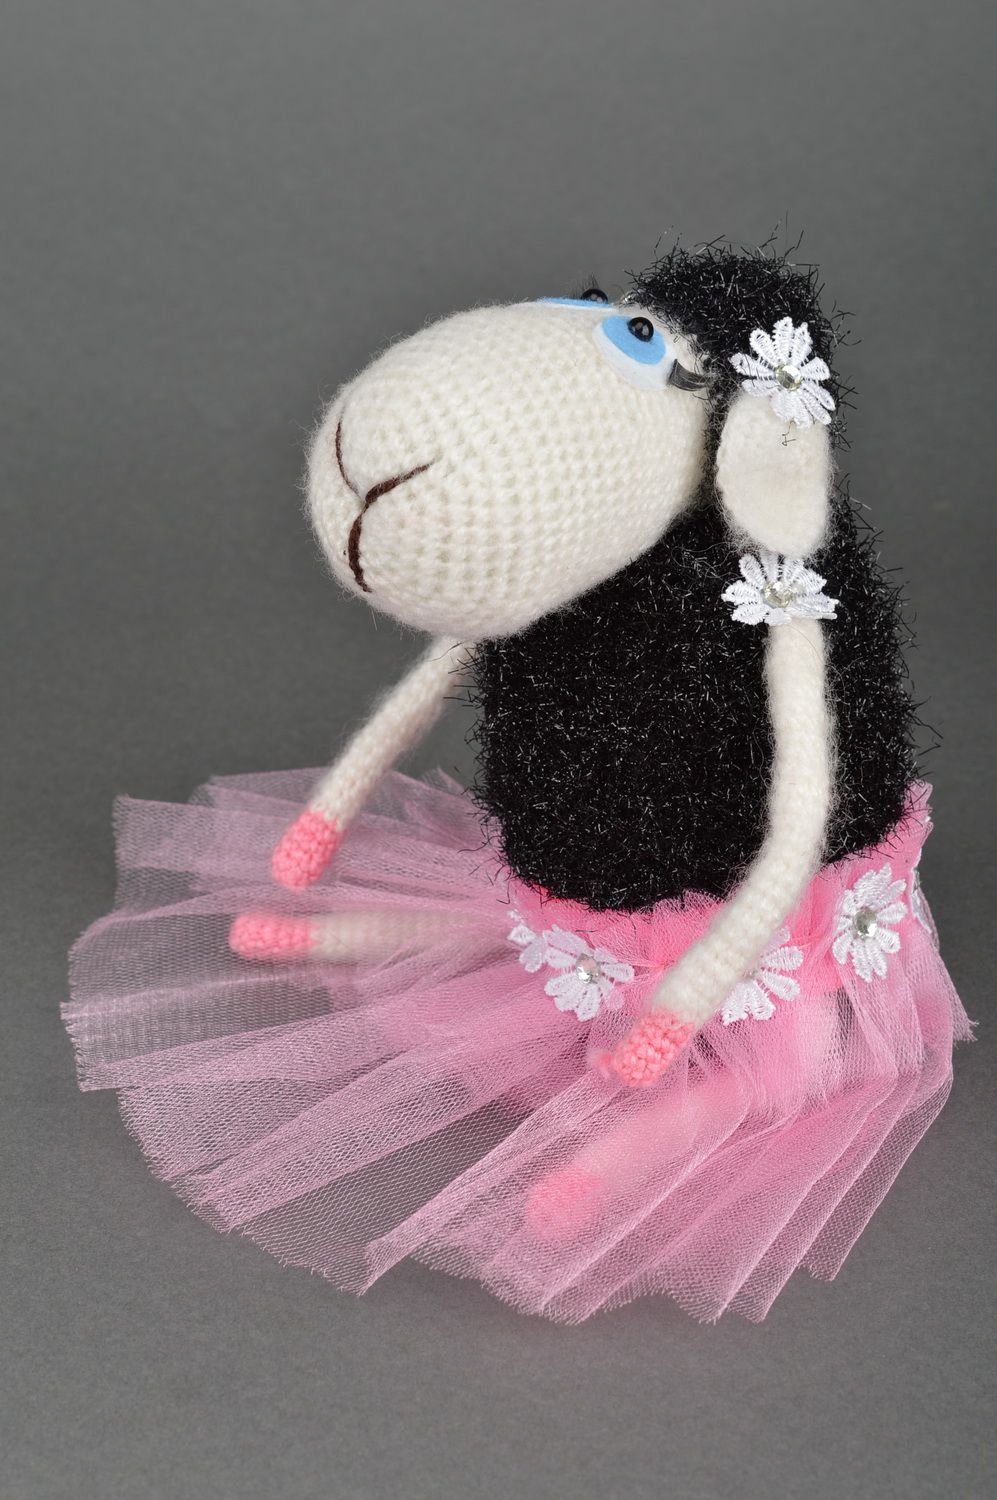 Handmade crocheted soft toy cute black and white lamb in pink tutu skirt photo 2